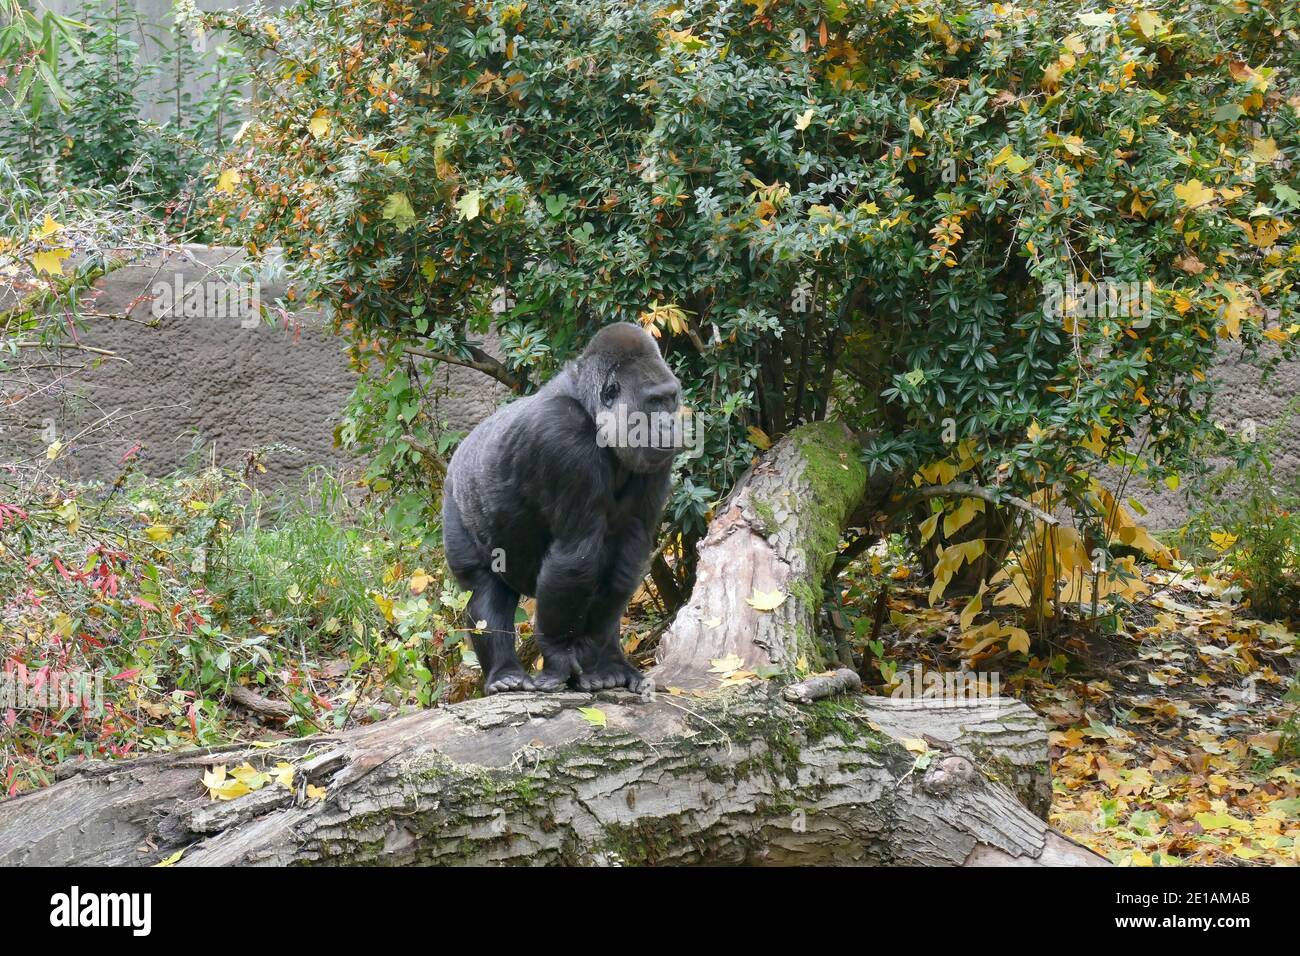 SEATTLE - NOV 11, 2020 -  Gorilla in its natural setting, Woodland Park Zoo, Seattle, Washington Stock Photo